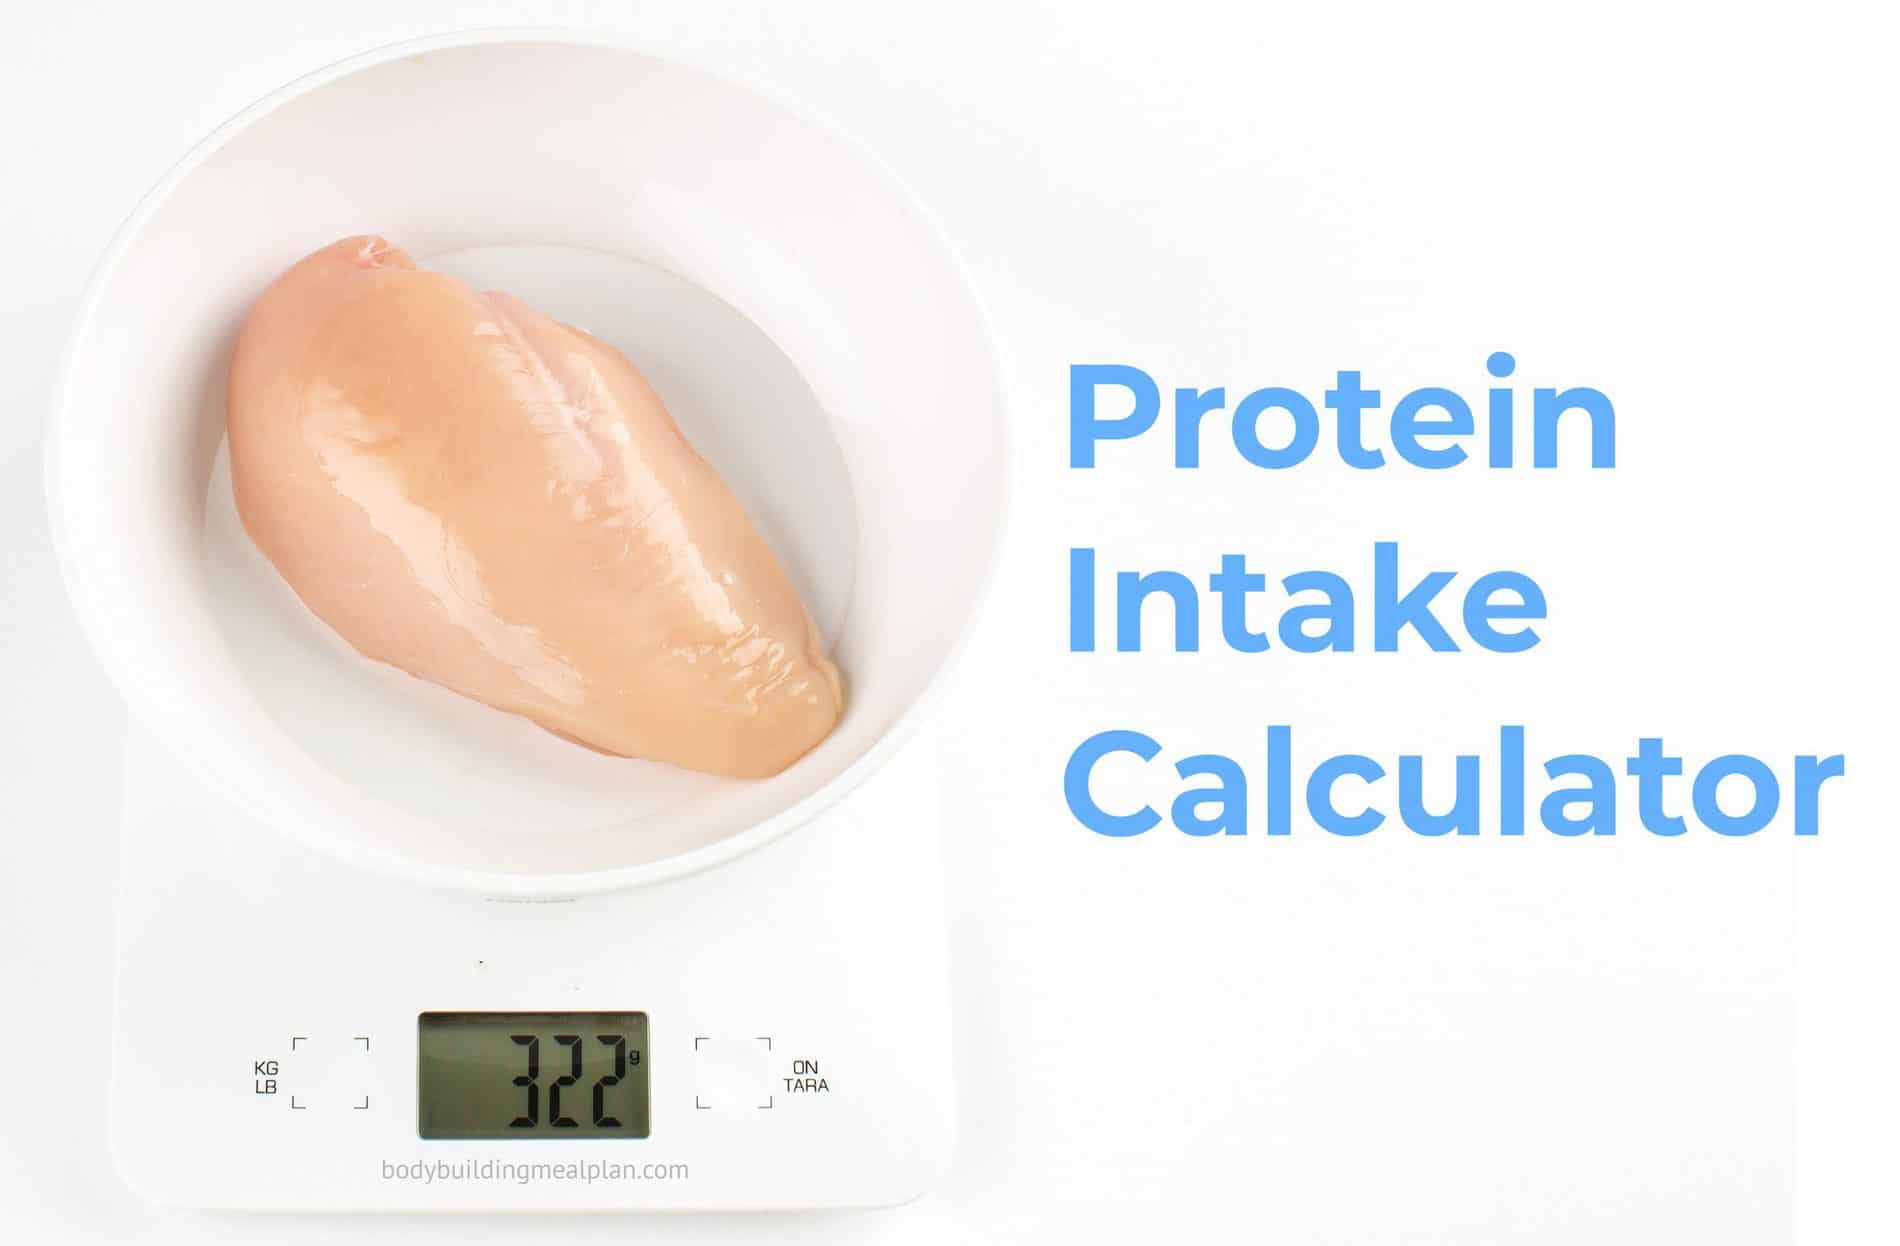 4 oz Chicken Breast Protein & Nutrition Facts